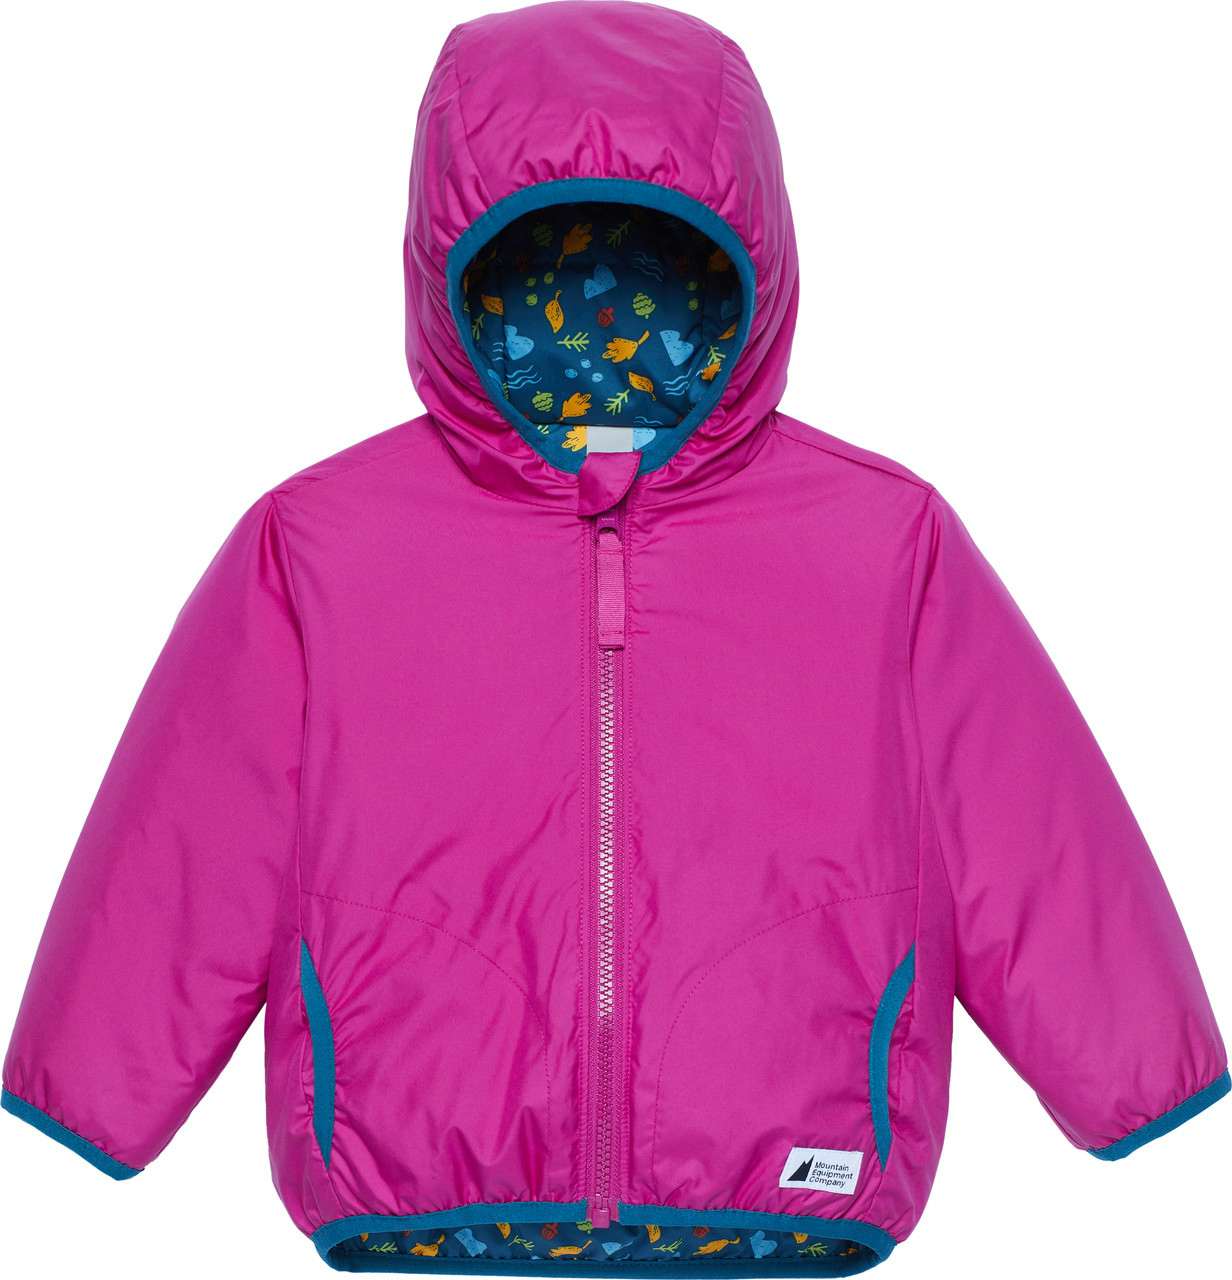 Bundle Up Reversible Jacket Passion Pink/Blue Suede